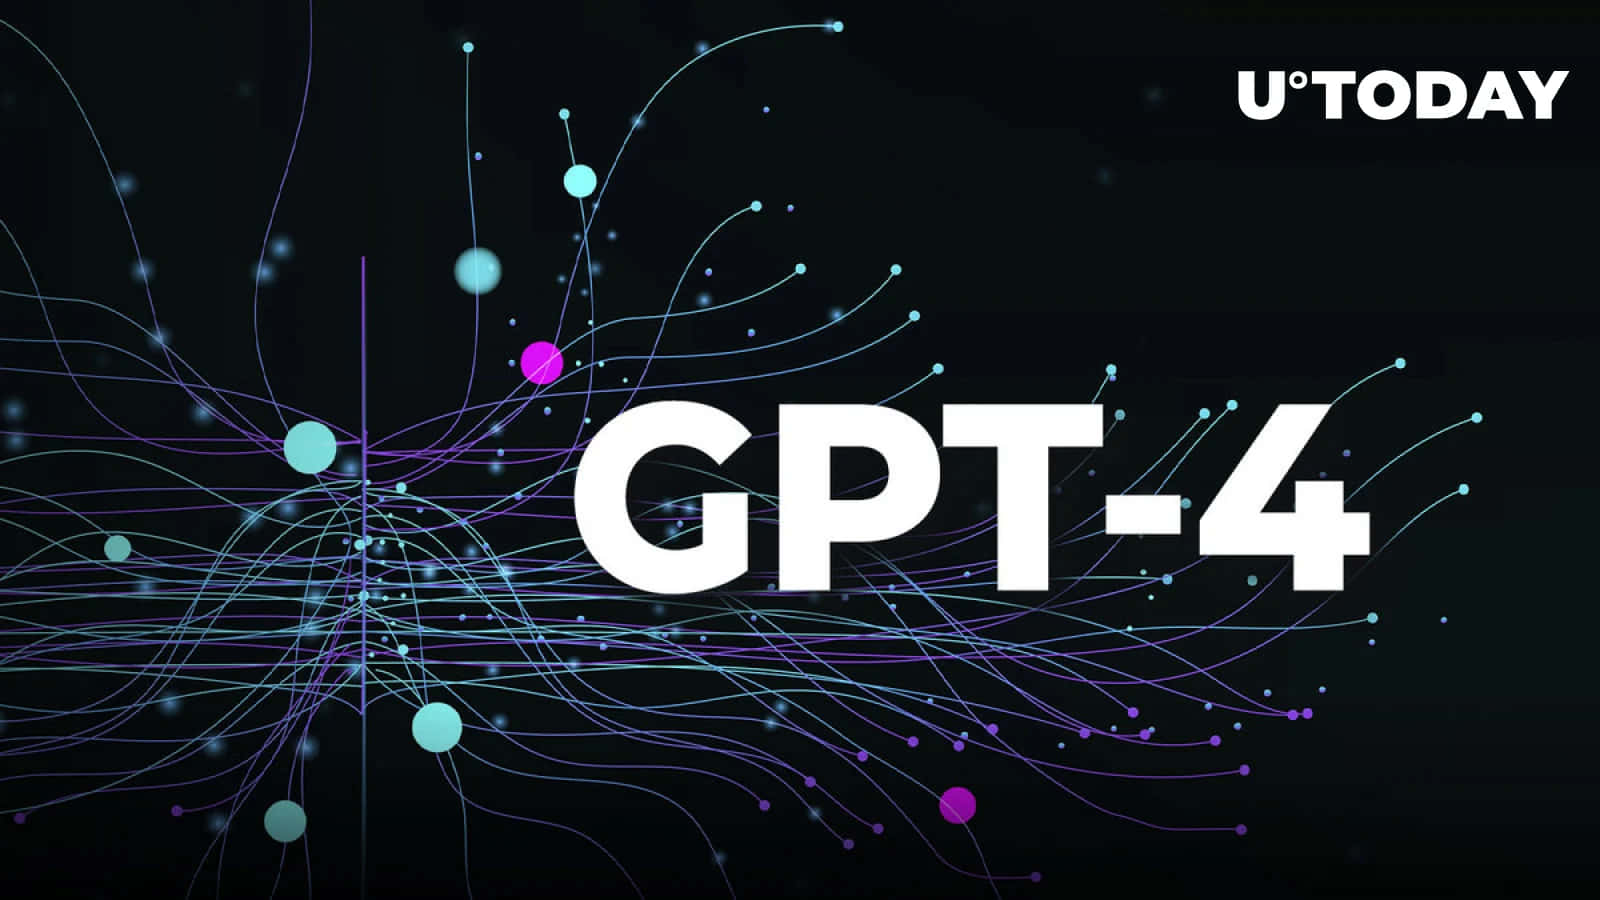 A stunning visualization of GPT-4 artificial intelligence technology Wallpaper